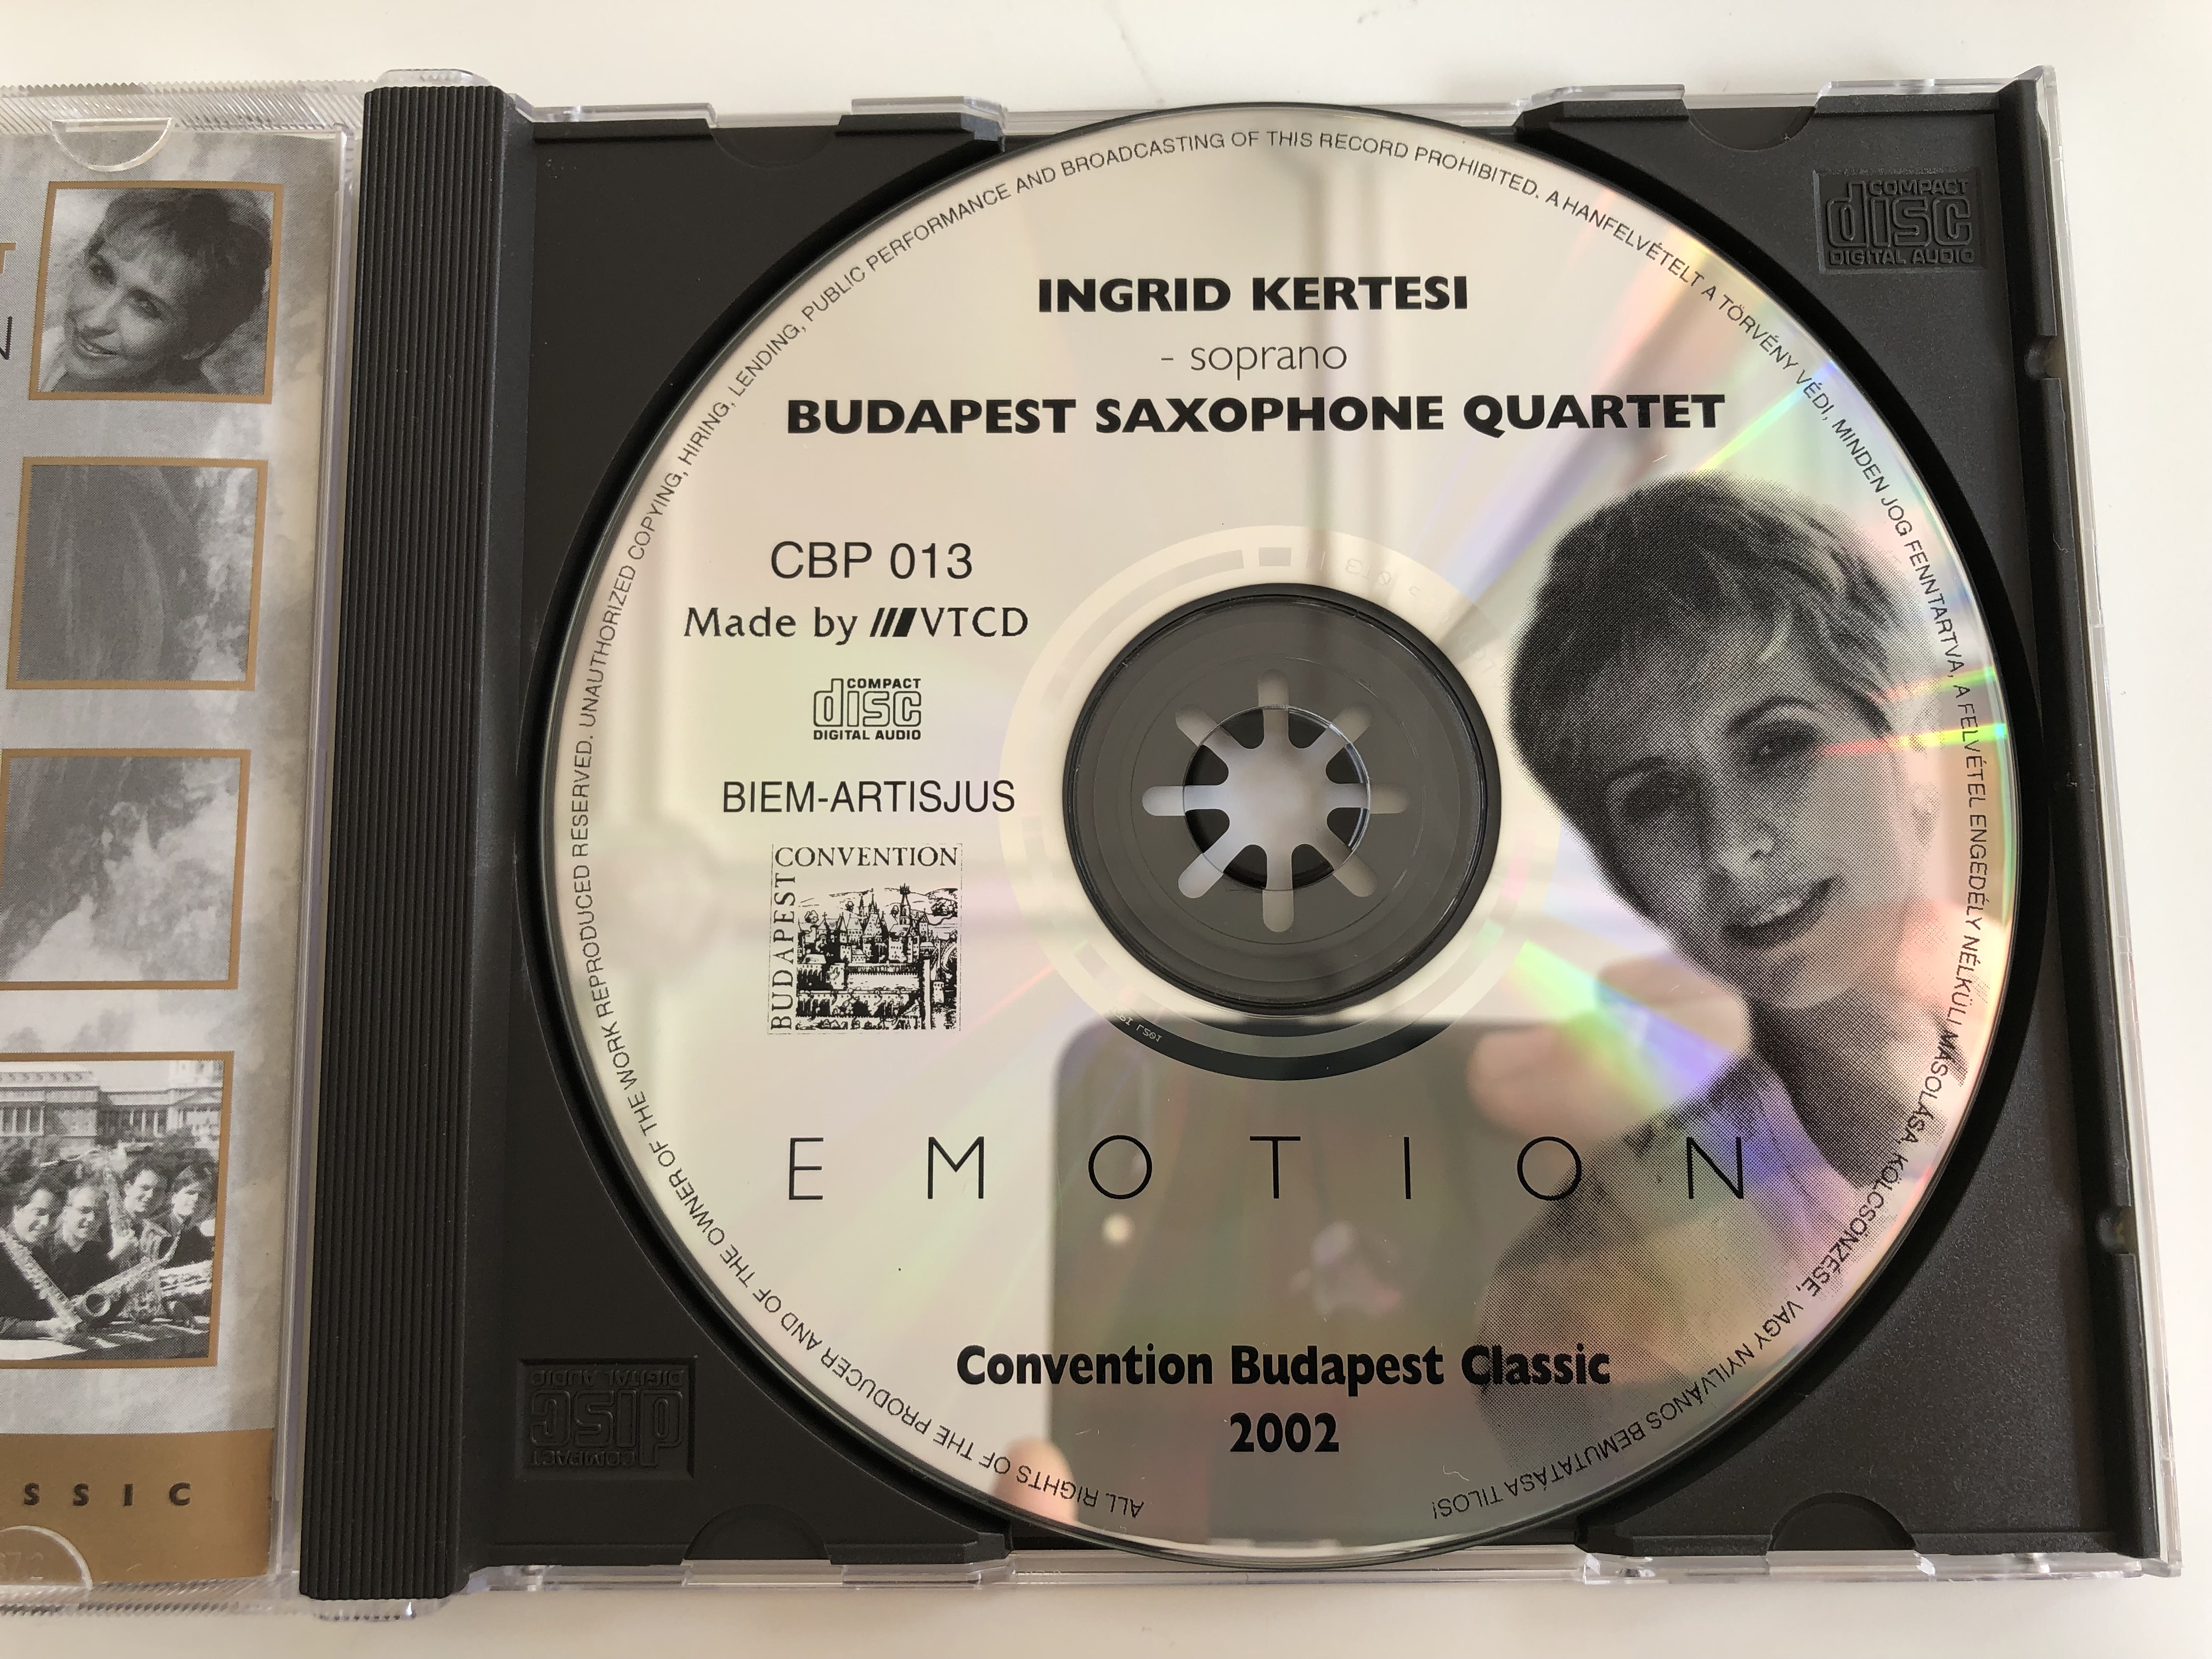 ingrid-kertesi-soprano-budapest-saxophone-quartet-emotion-convention-budapest-classics-audio-cd-2002-cbp-013-5-.jpg